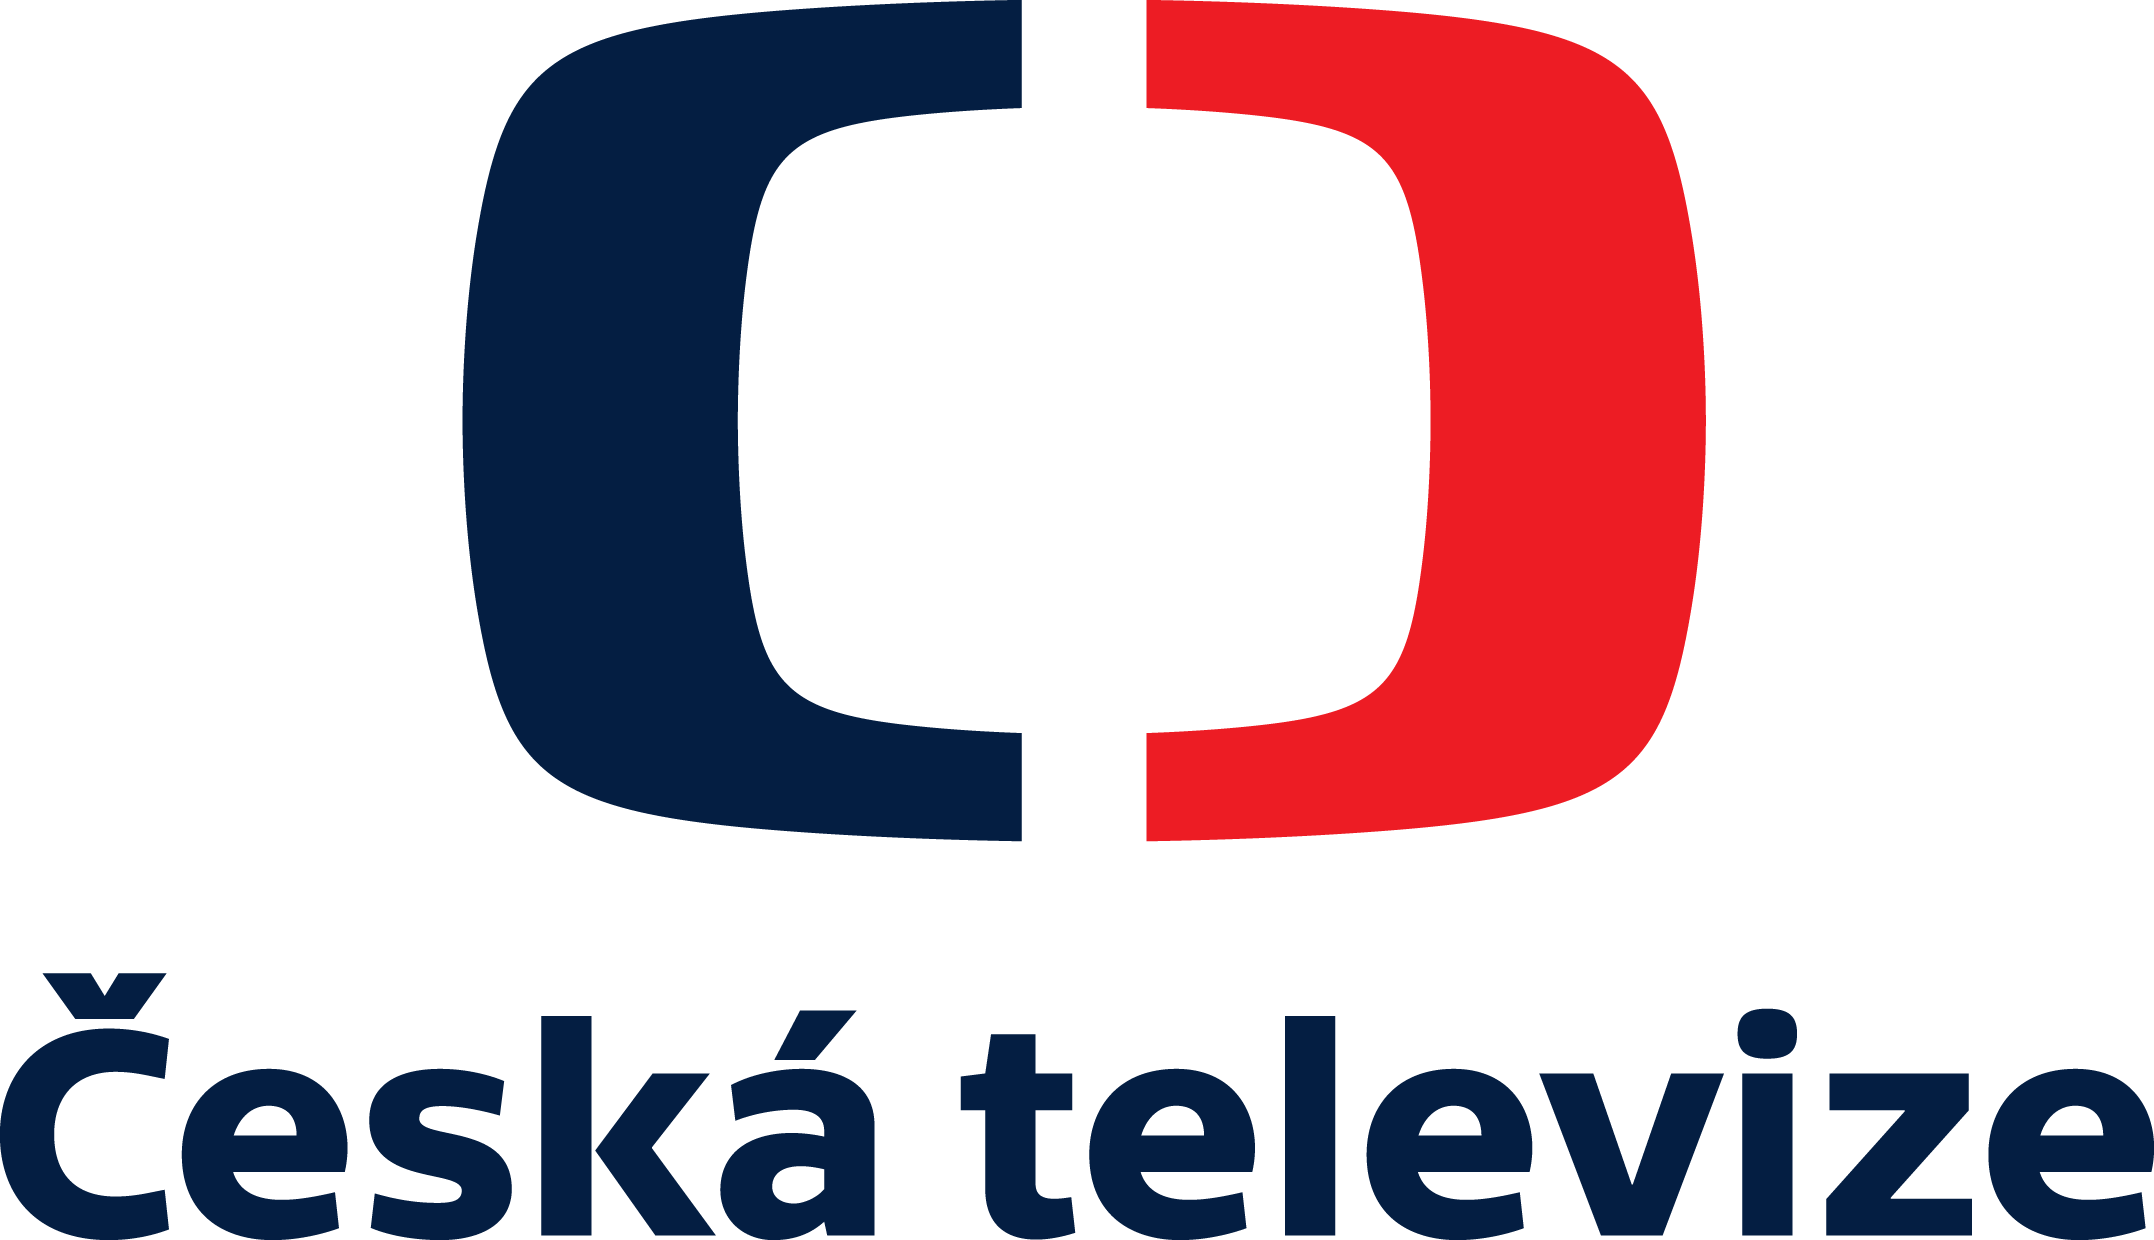 ceska_televize